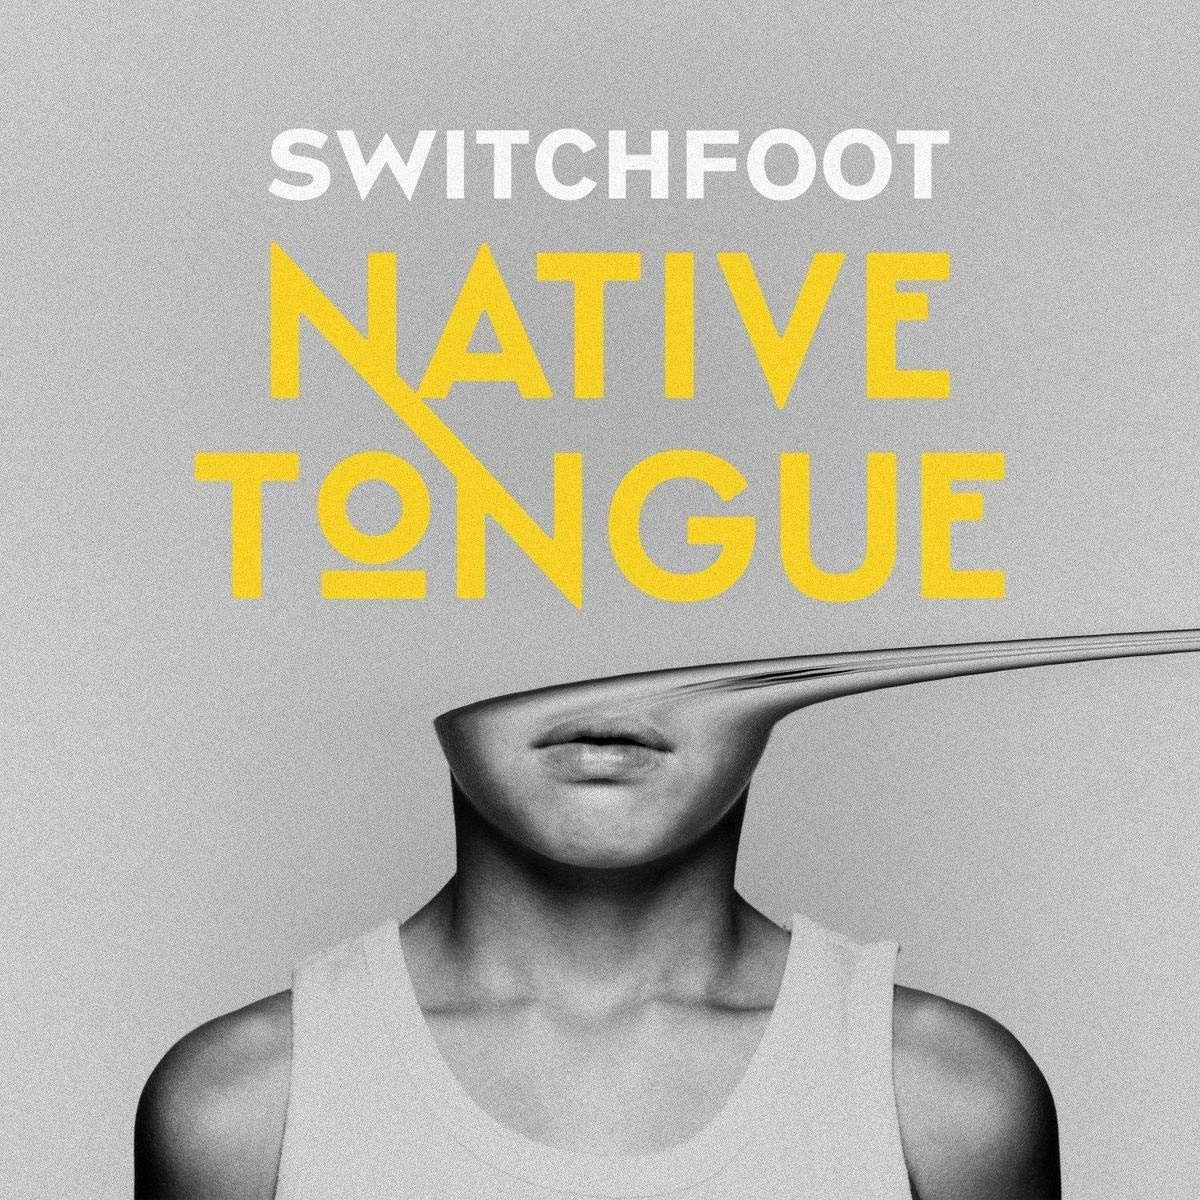 Jesusfreakhideoutcom Switchfoot Native Tongue Review - roblox music codes twenty one pilots christ pages